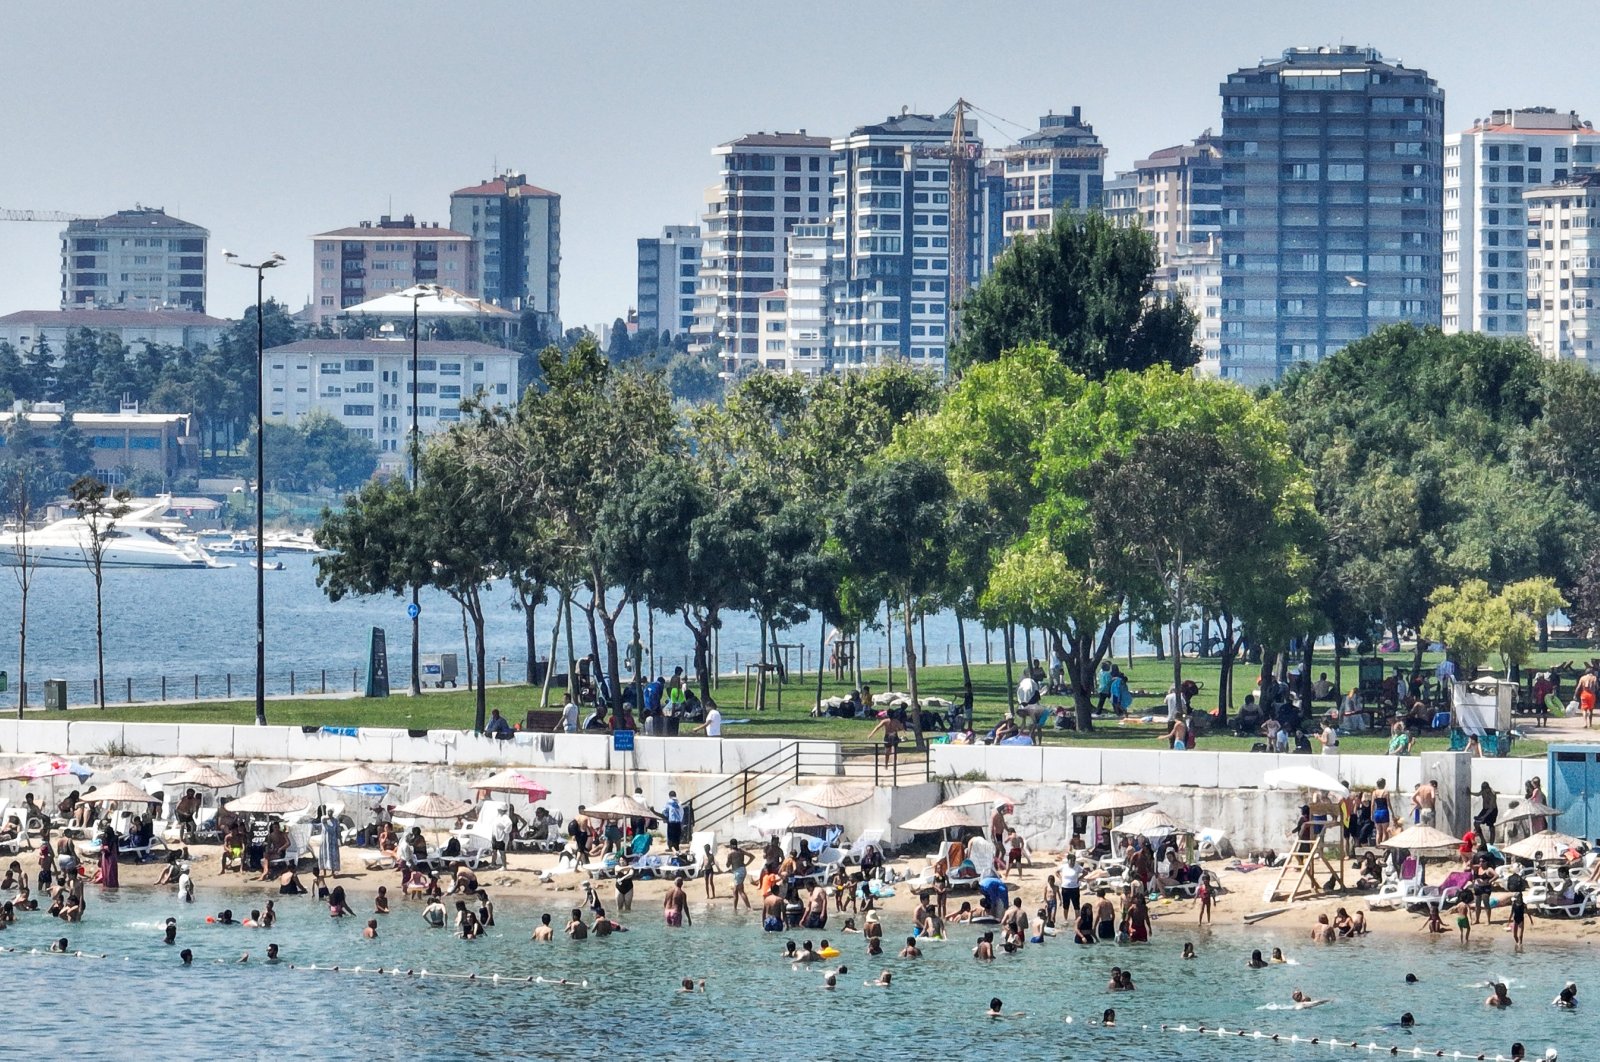 Beaches, parks fill up as temperatures peak across Türkiye